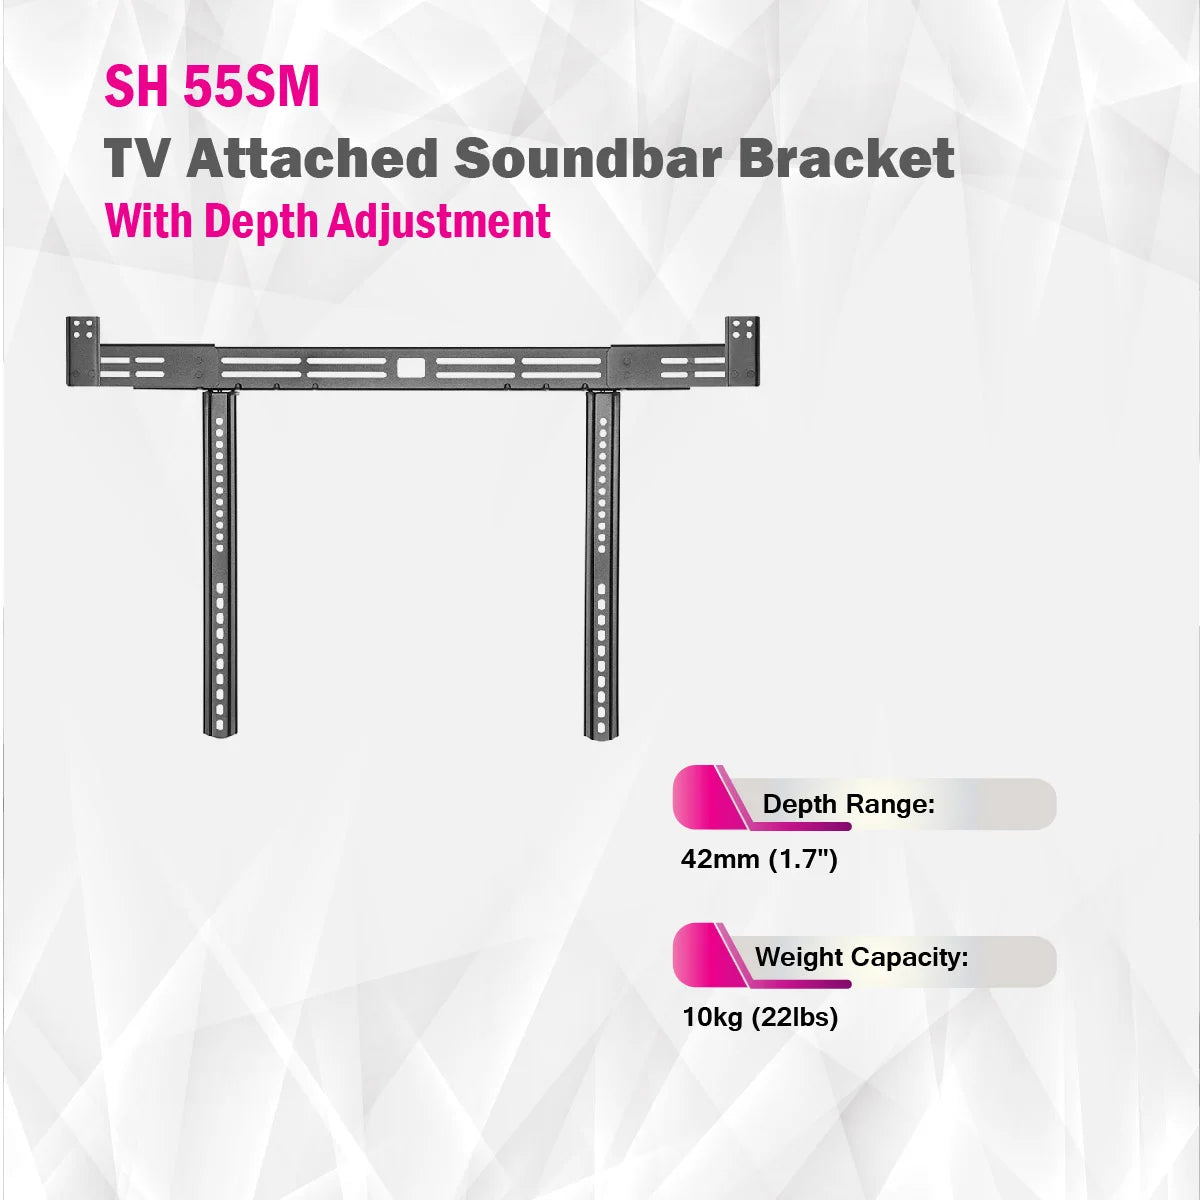 SkillTech  - SH 55SM - V Attached Soundbar Bracket With Depth Adjustment TV Wall Mount